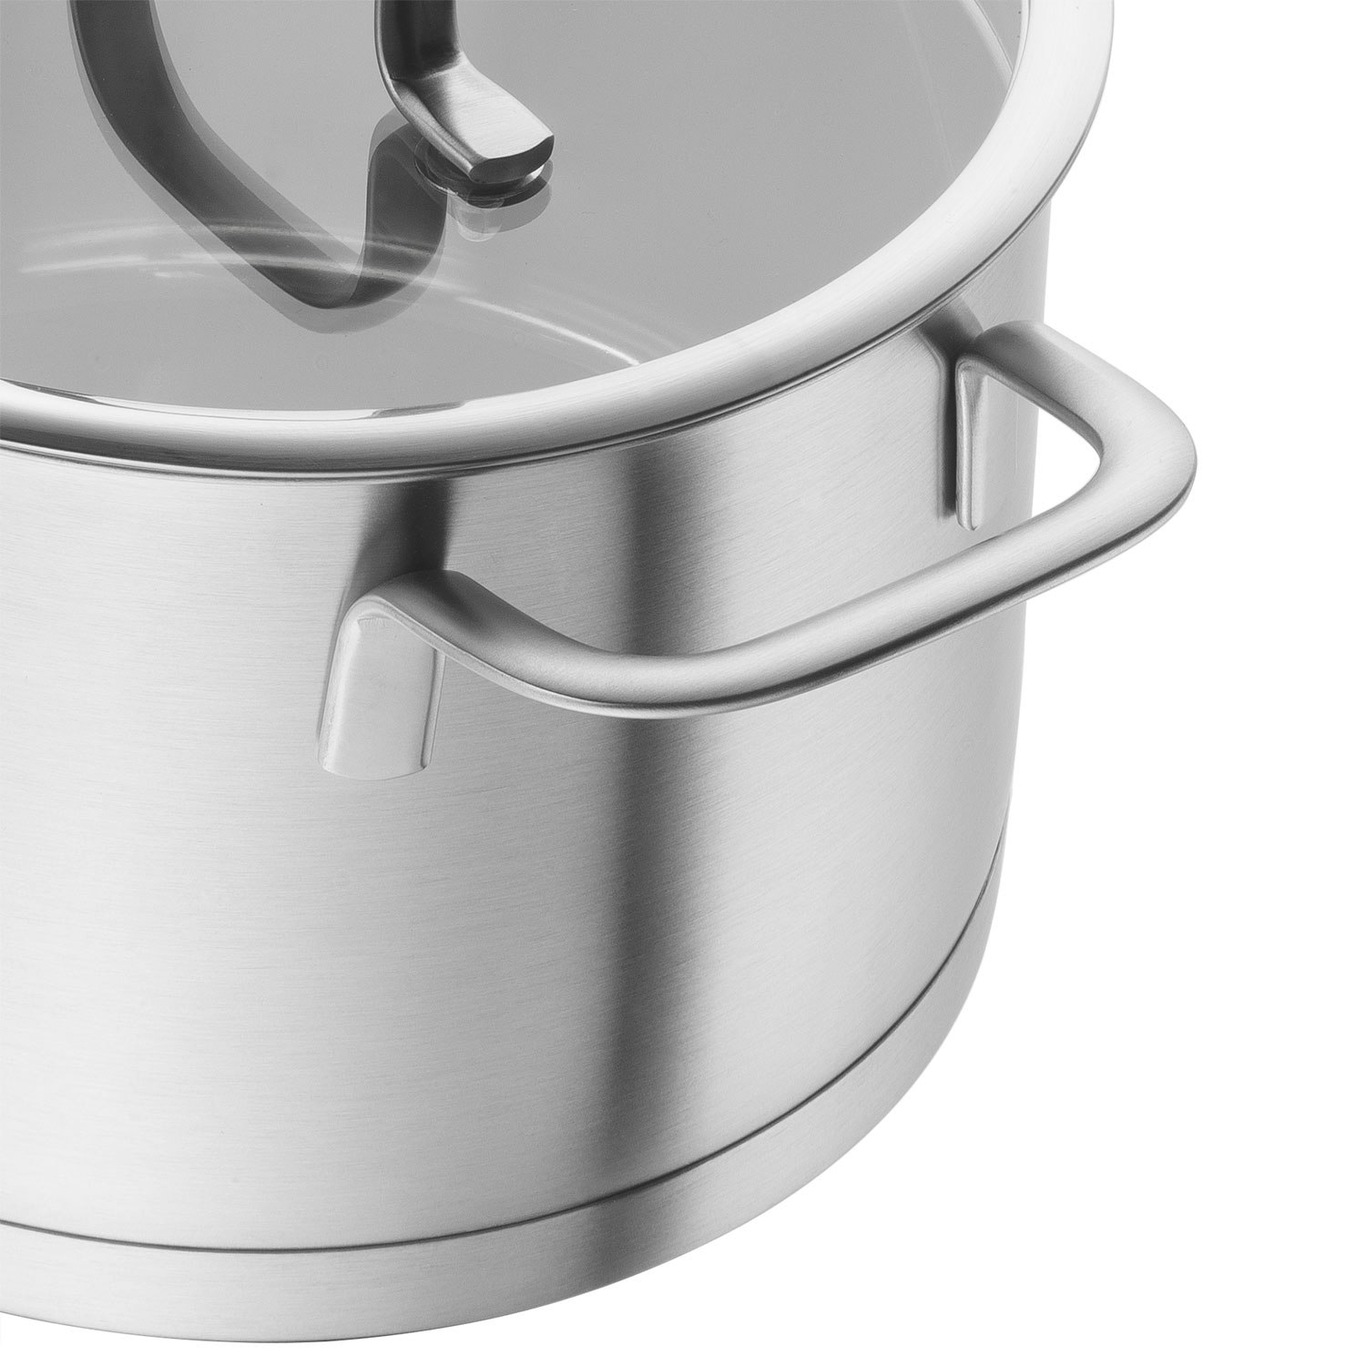 Pot Set Stackable 3-pack, Stainless Steel - Mareld @ RoyalDesign